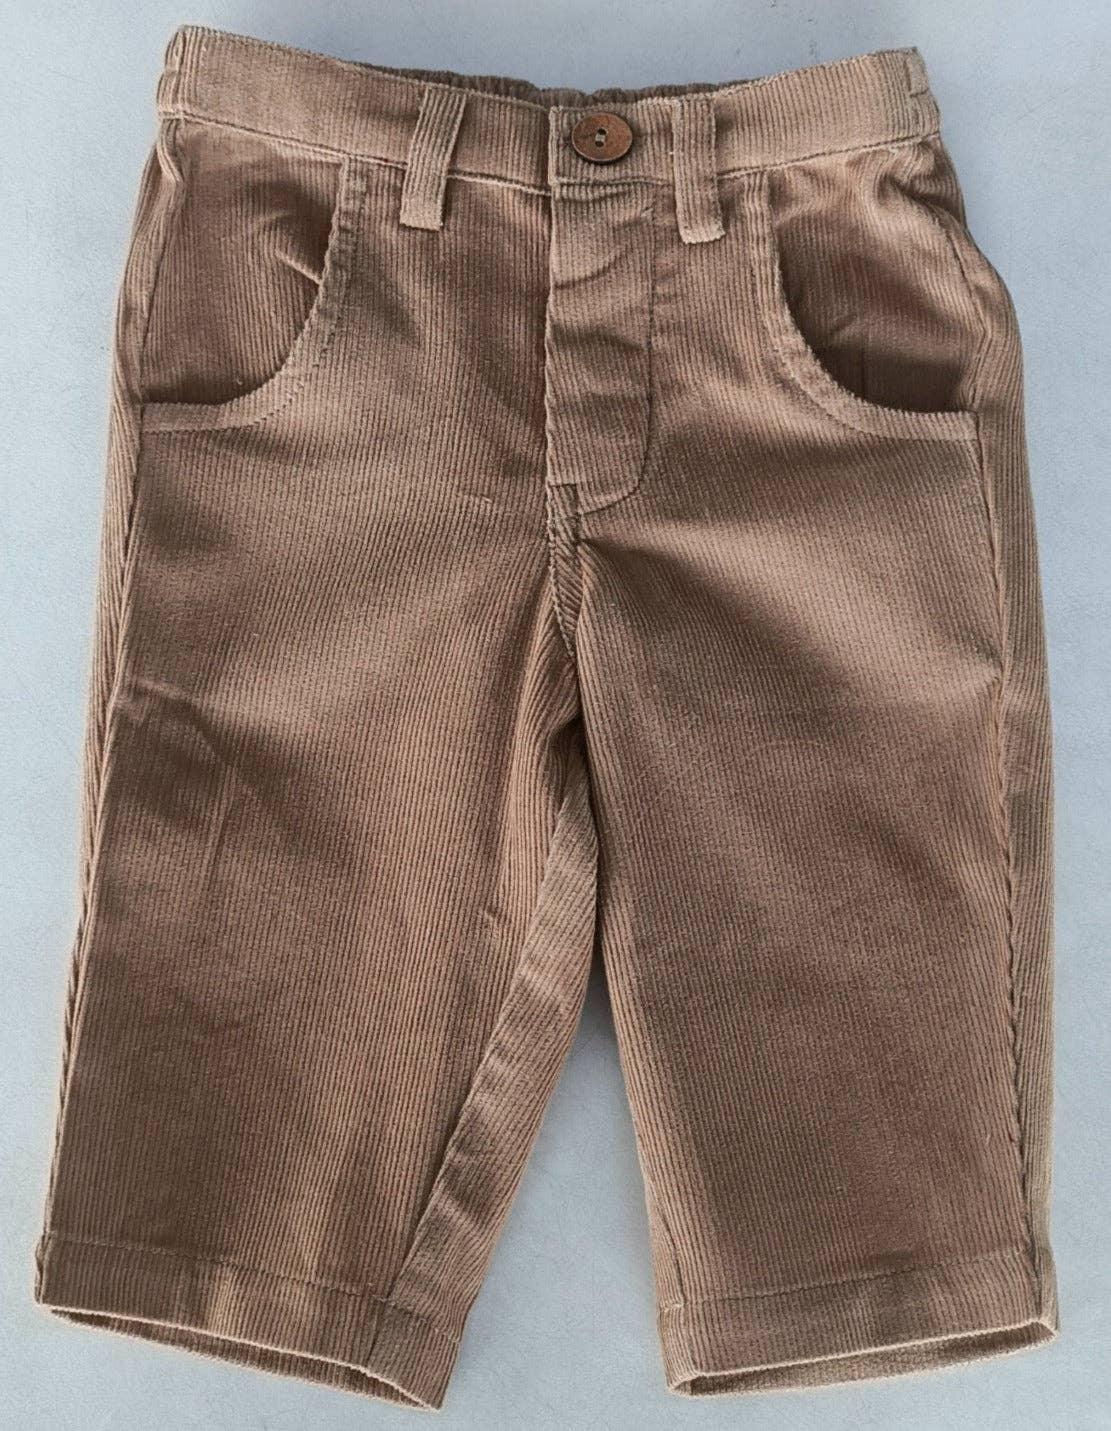 Little Boys Corduroy Pants - Beige or Navy